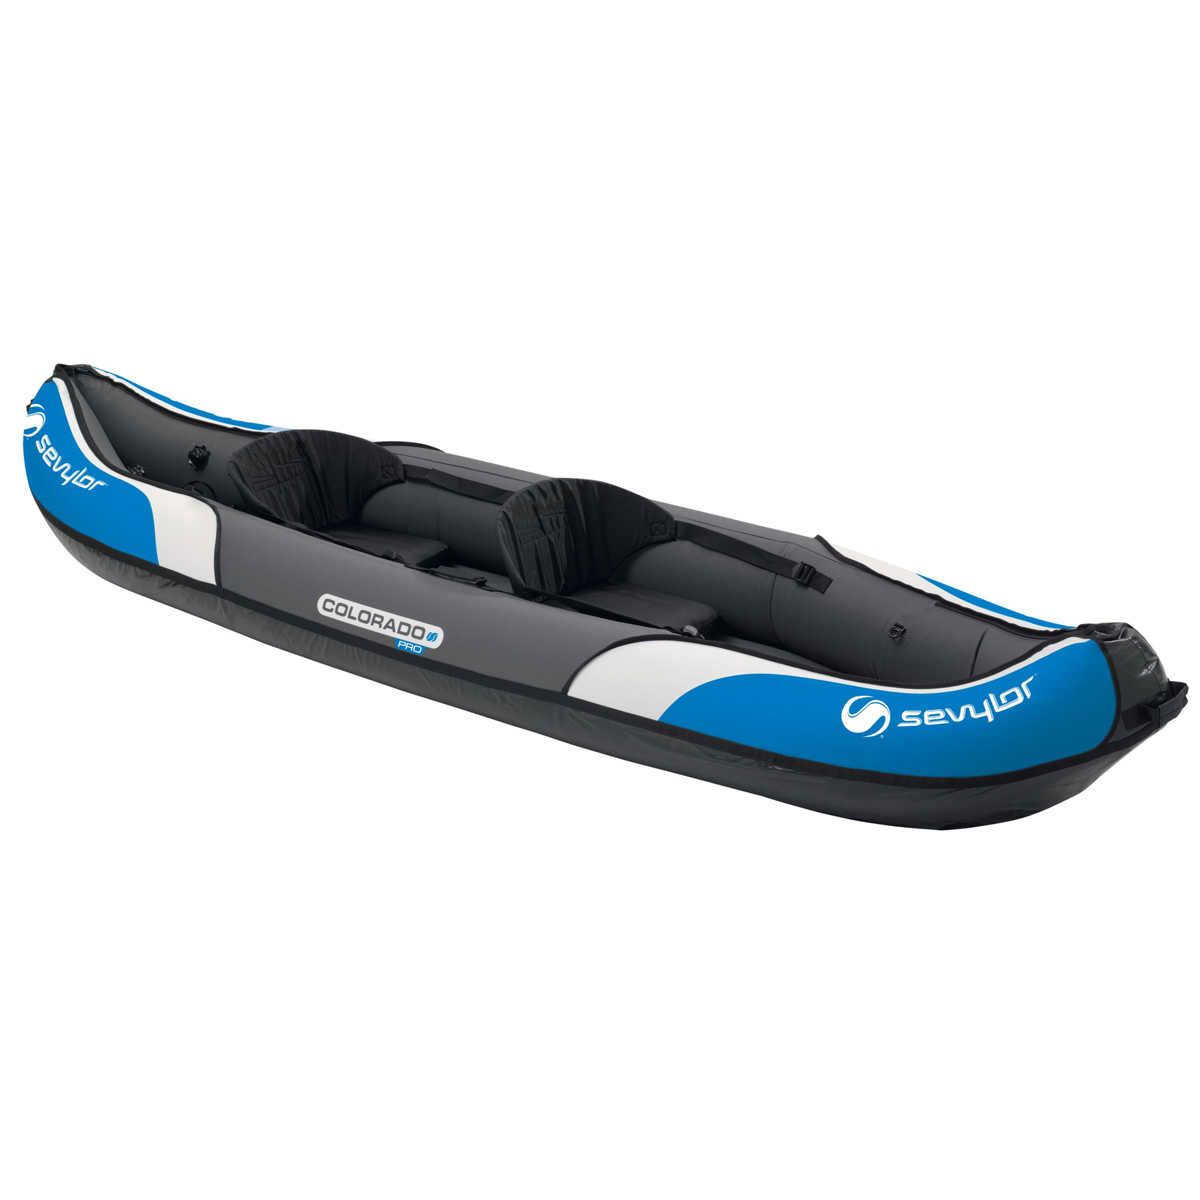 Kit Kayak Gonflable Colorado Pro - 2 personnes - Bleu 1